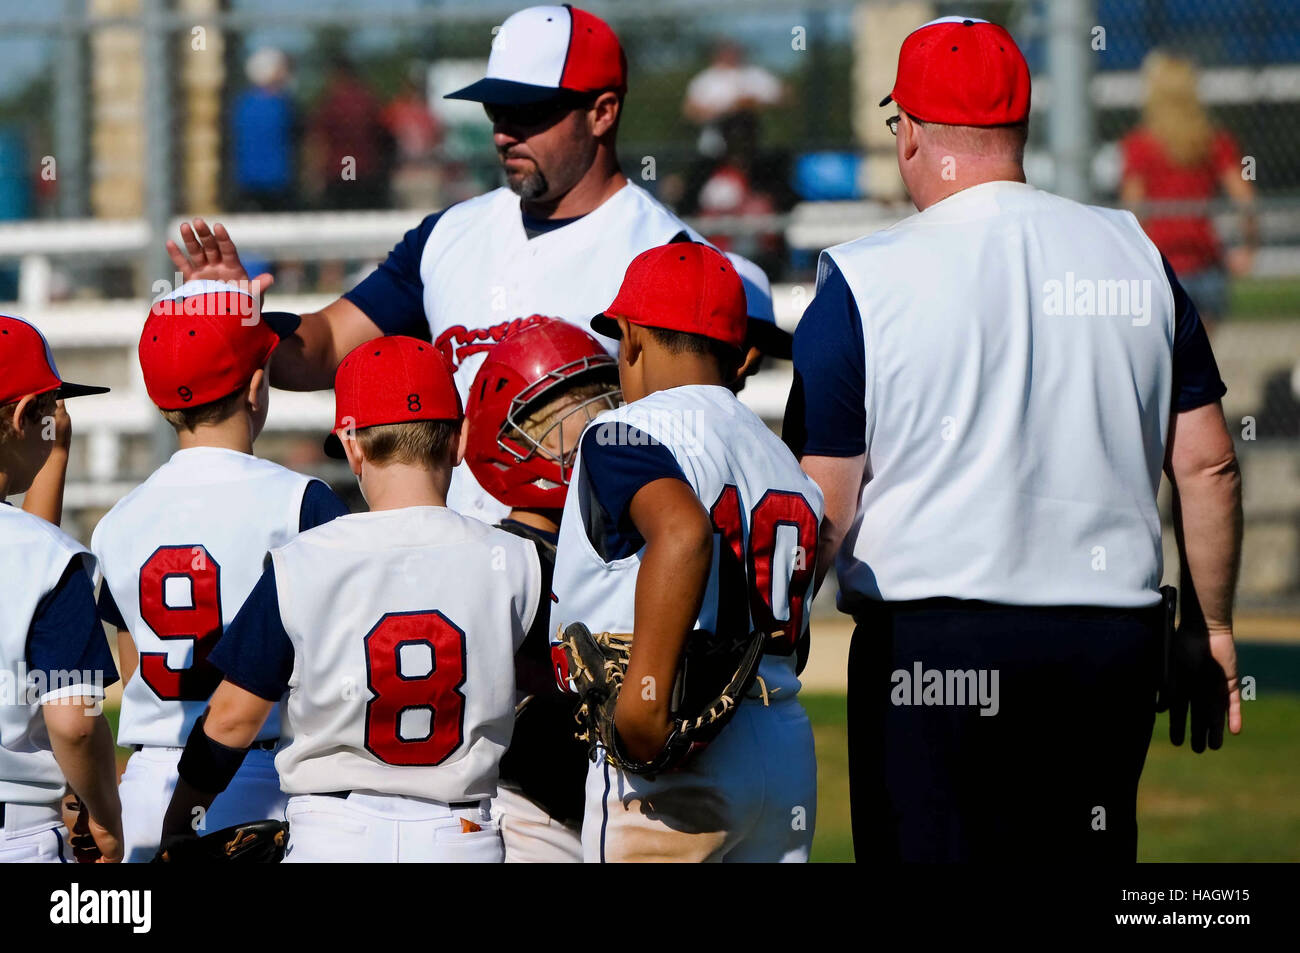 Baseball team huddled with their coach getting praise. Stock Photo